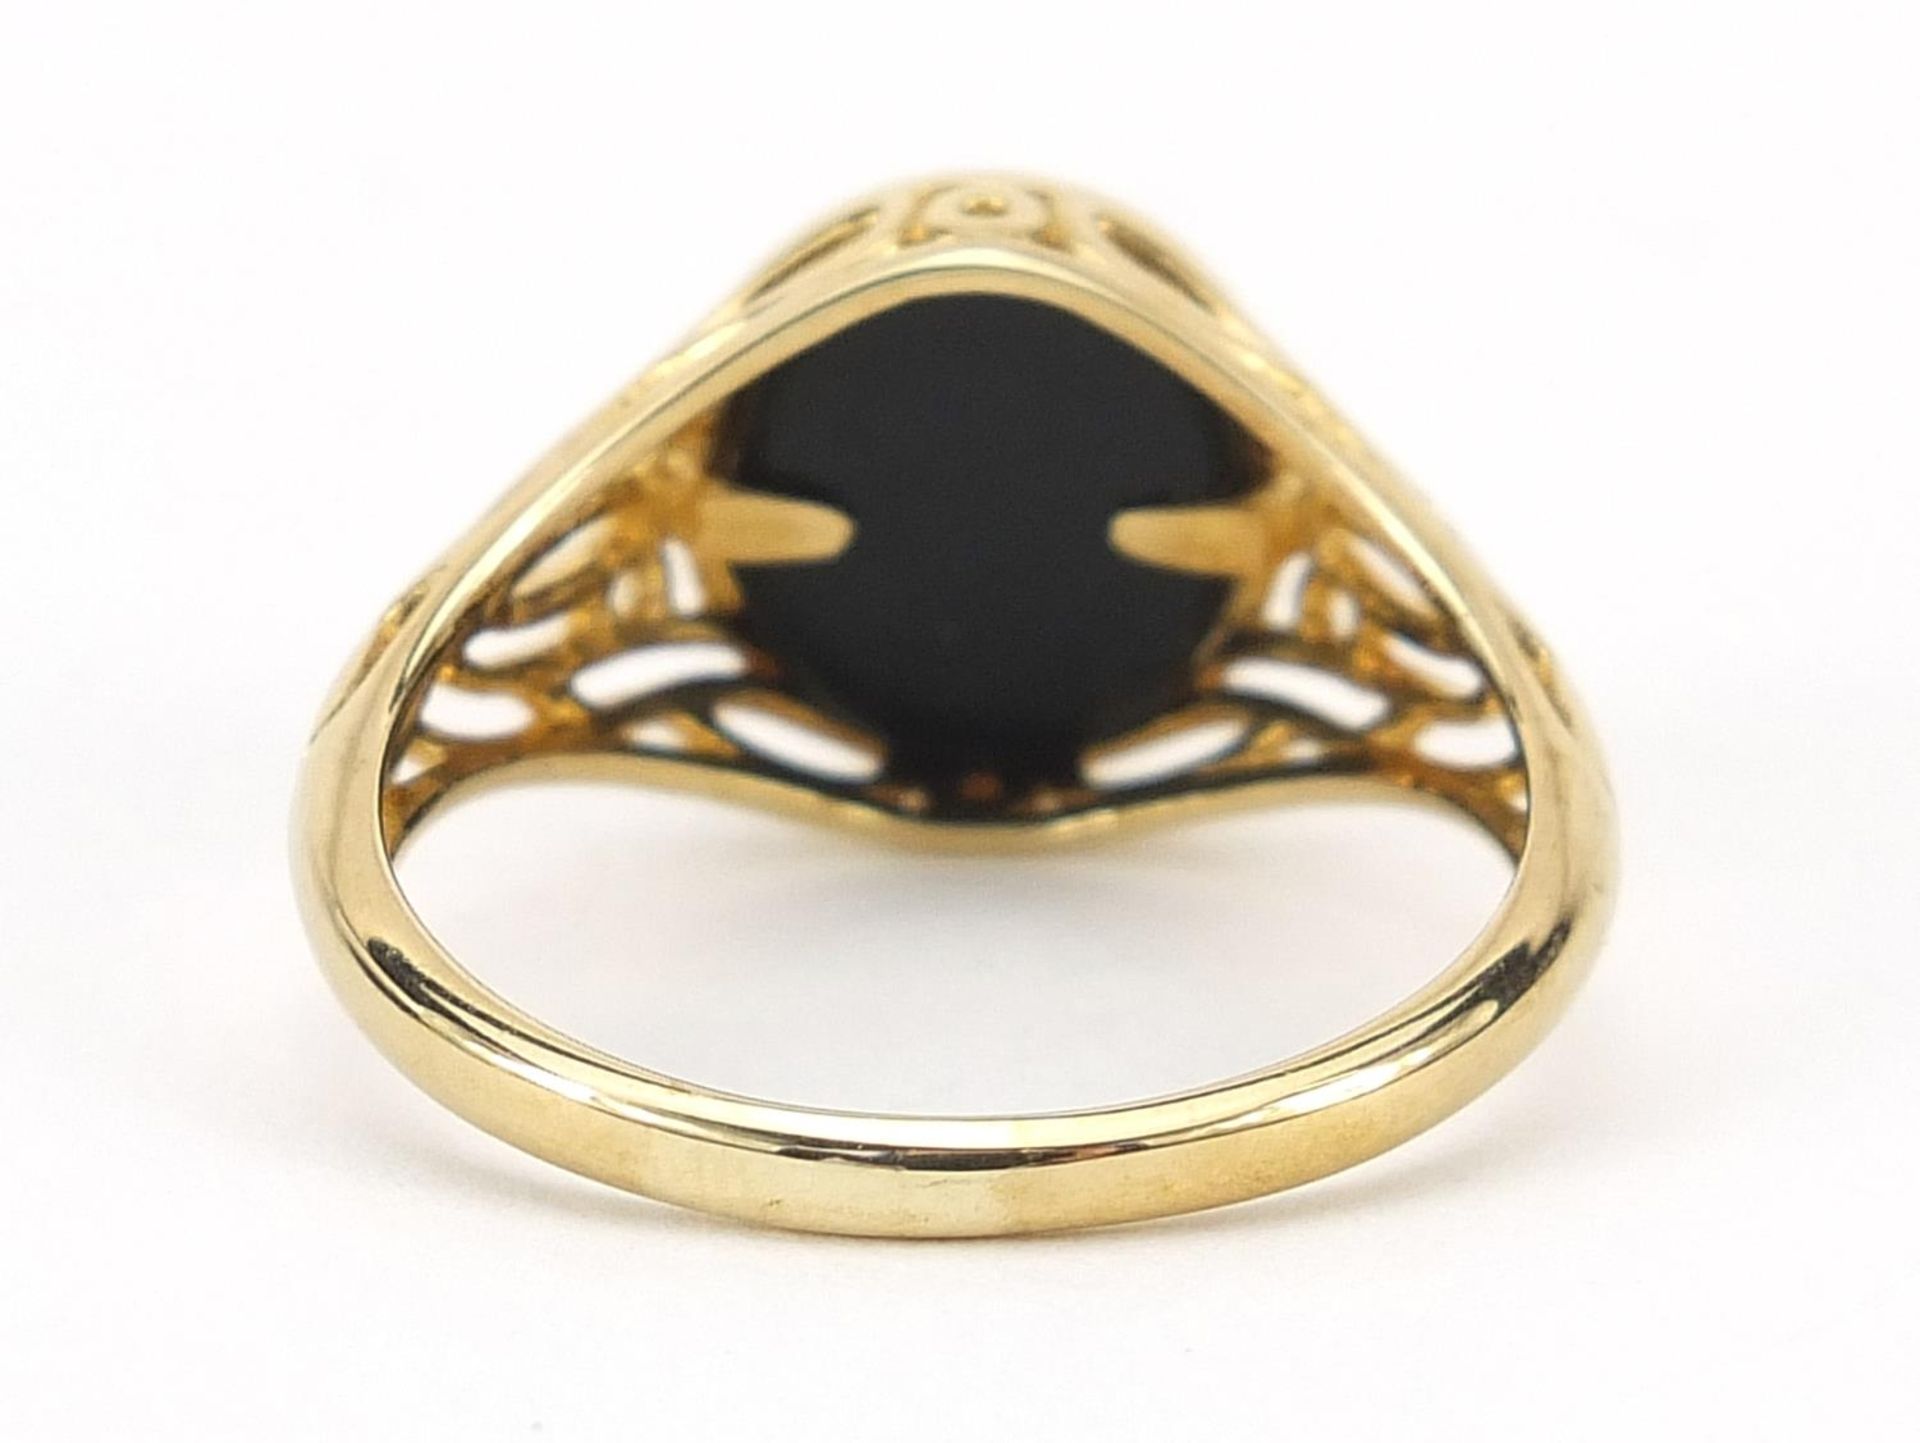 9ct gold and black onyx Jaguar car mascot ring, size V, 4.3g - Image 3 of 5